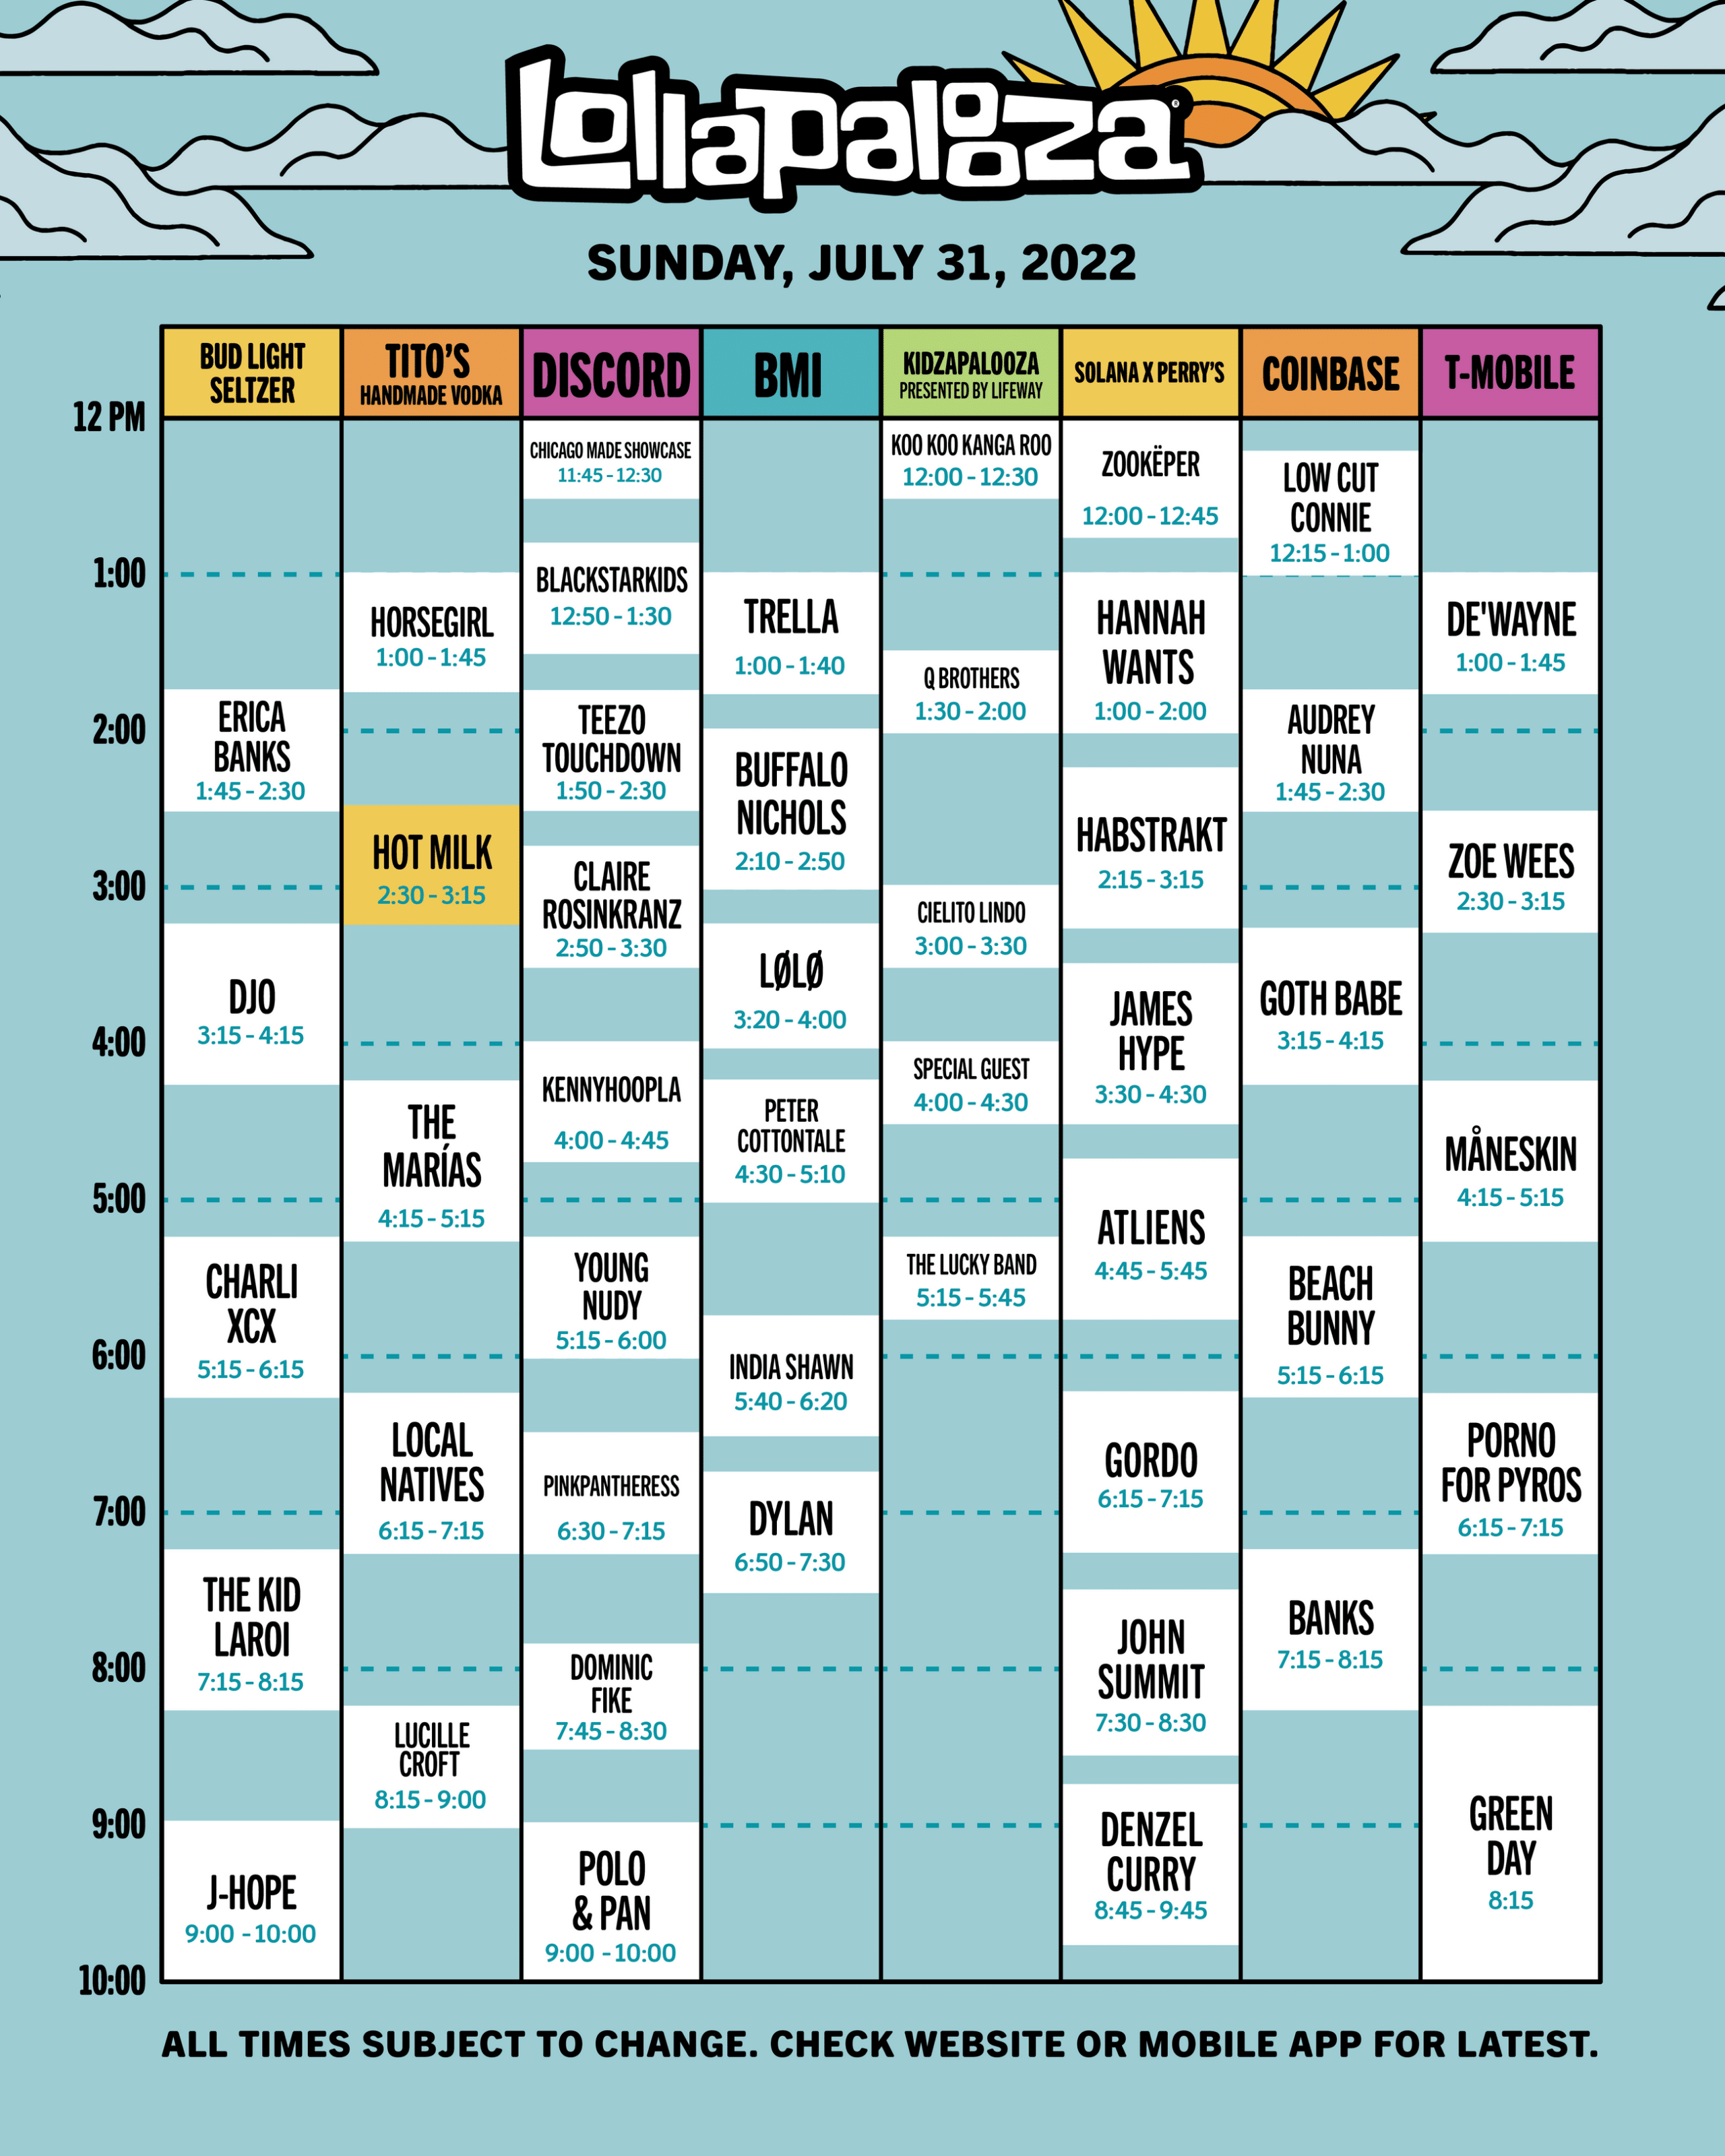 Sunday Lollapalooza 2022 Schedule